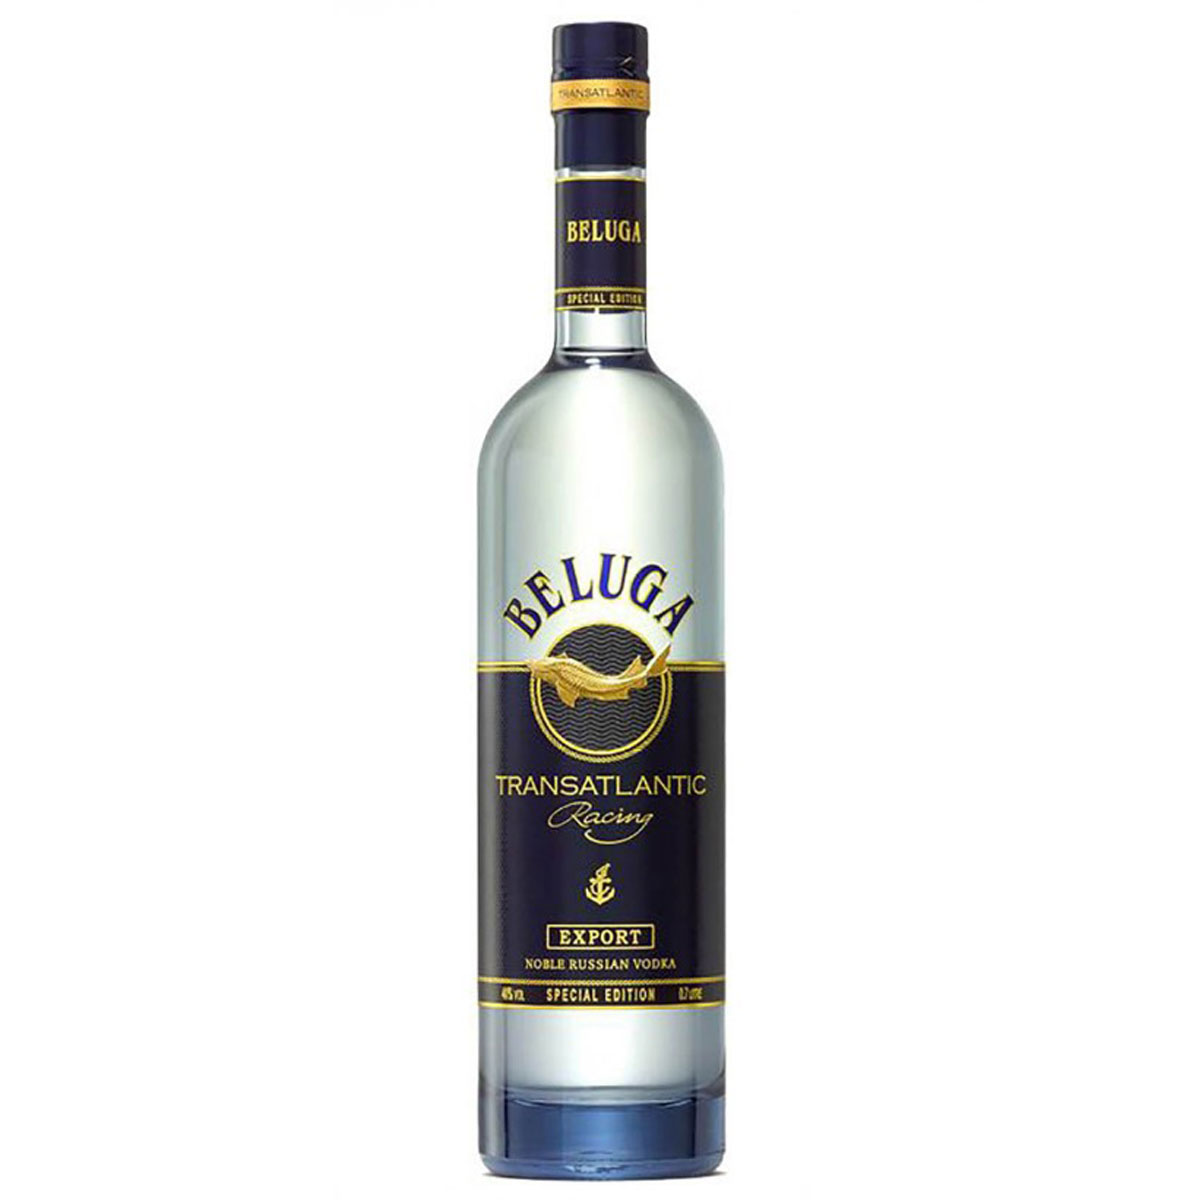 a bottle of beluga transatlantic racing special edition vodka